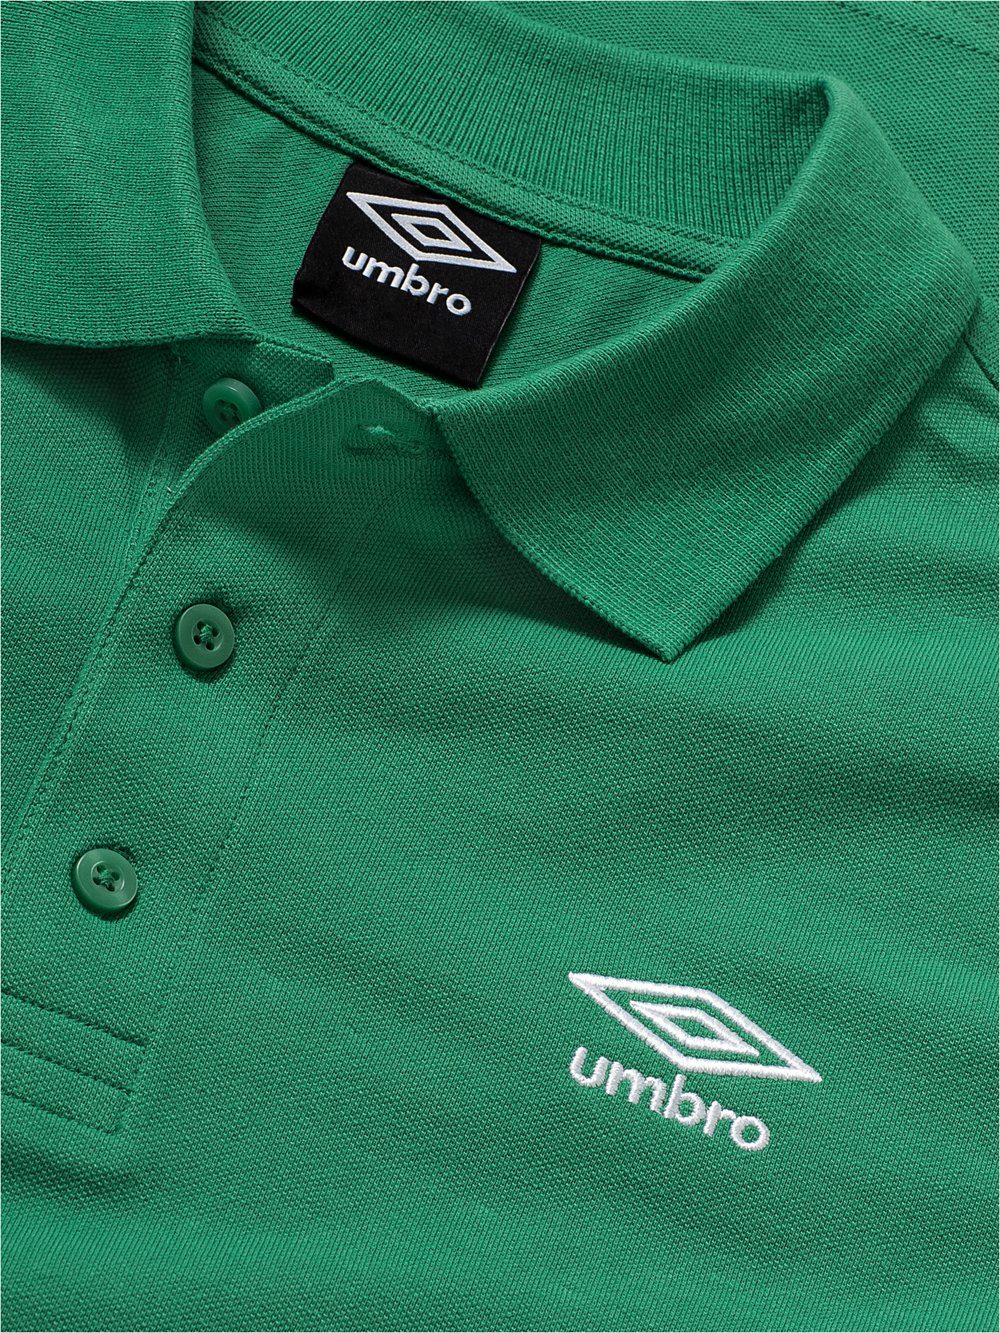 Umbro Piqué-Gewebe körniges aus Poloshirt Baumwolle grün